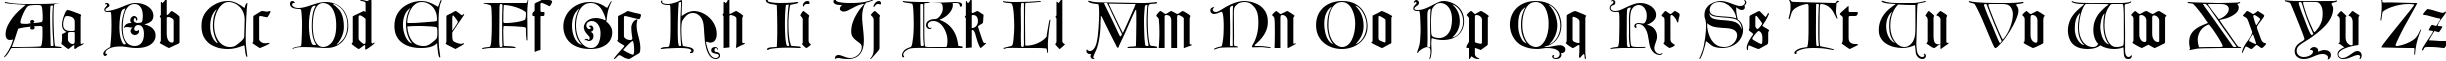 Пример написания английского алфавита шрифтом Lombardina One Roman